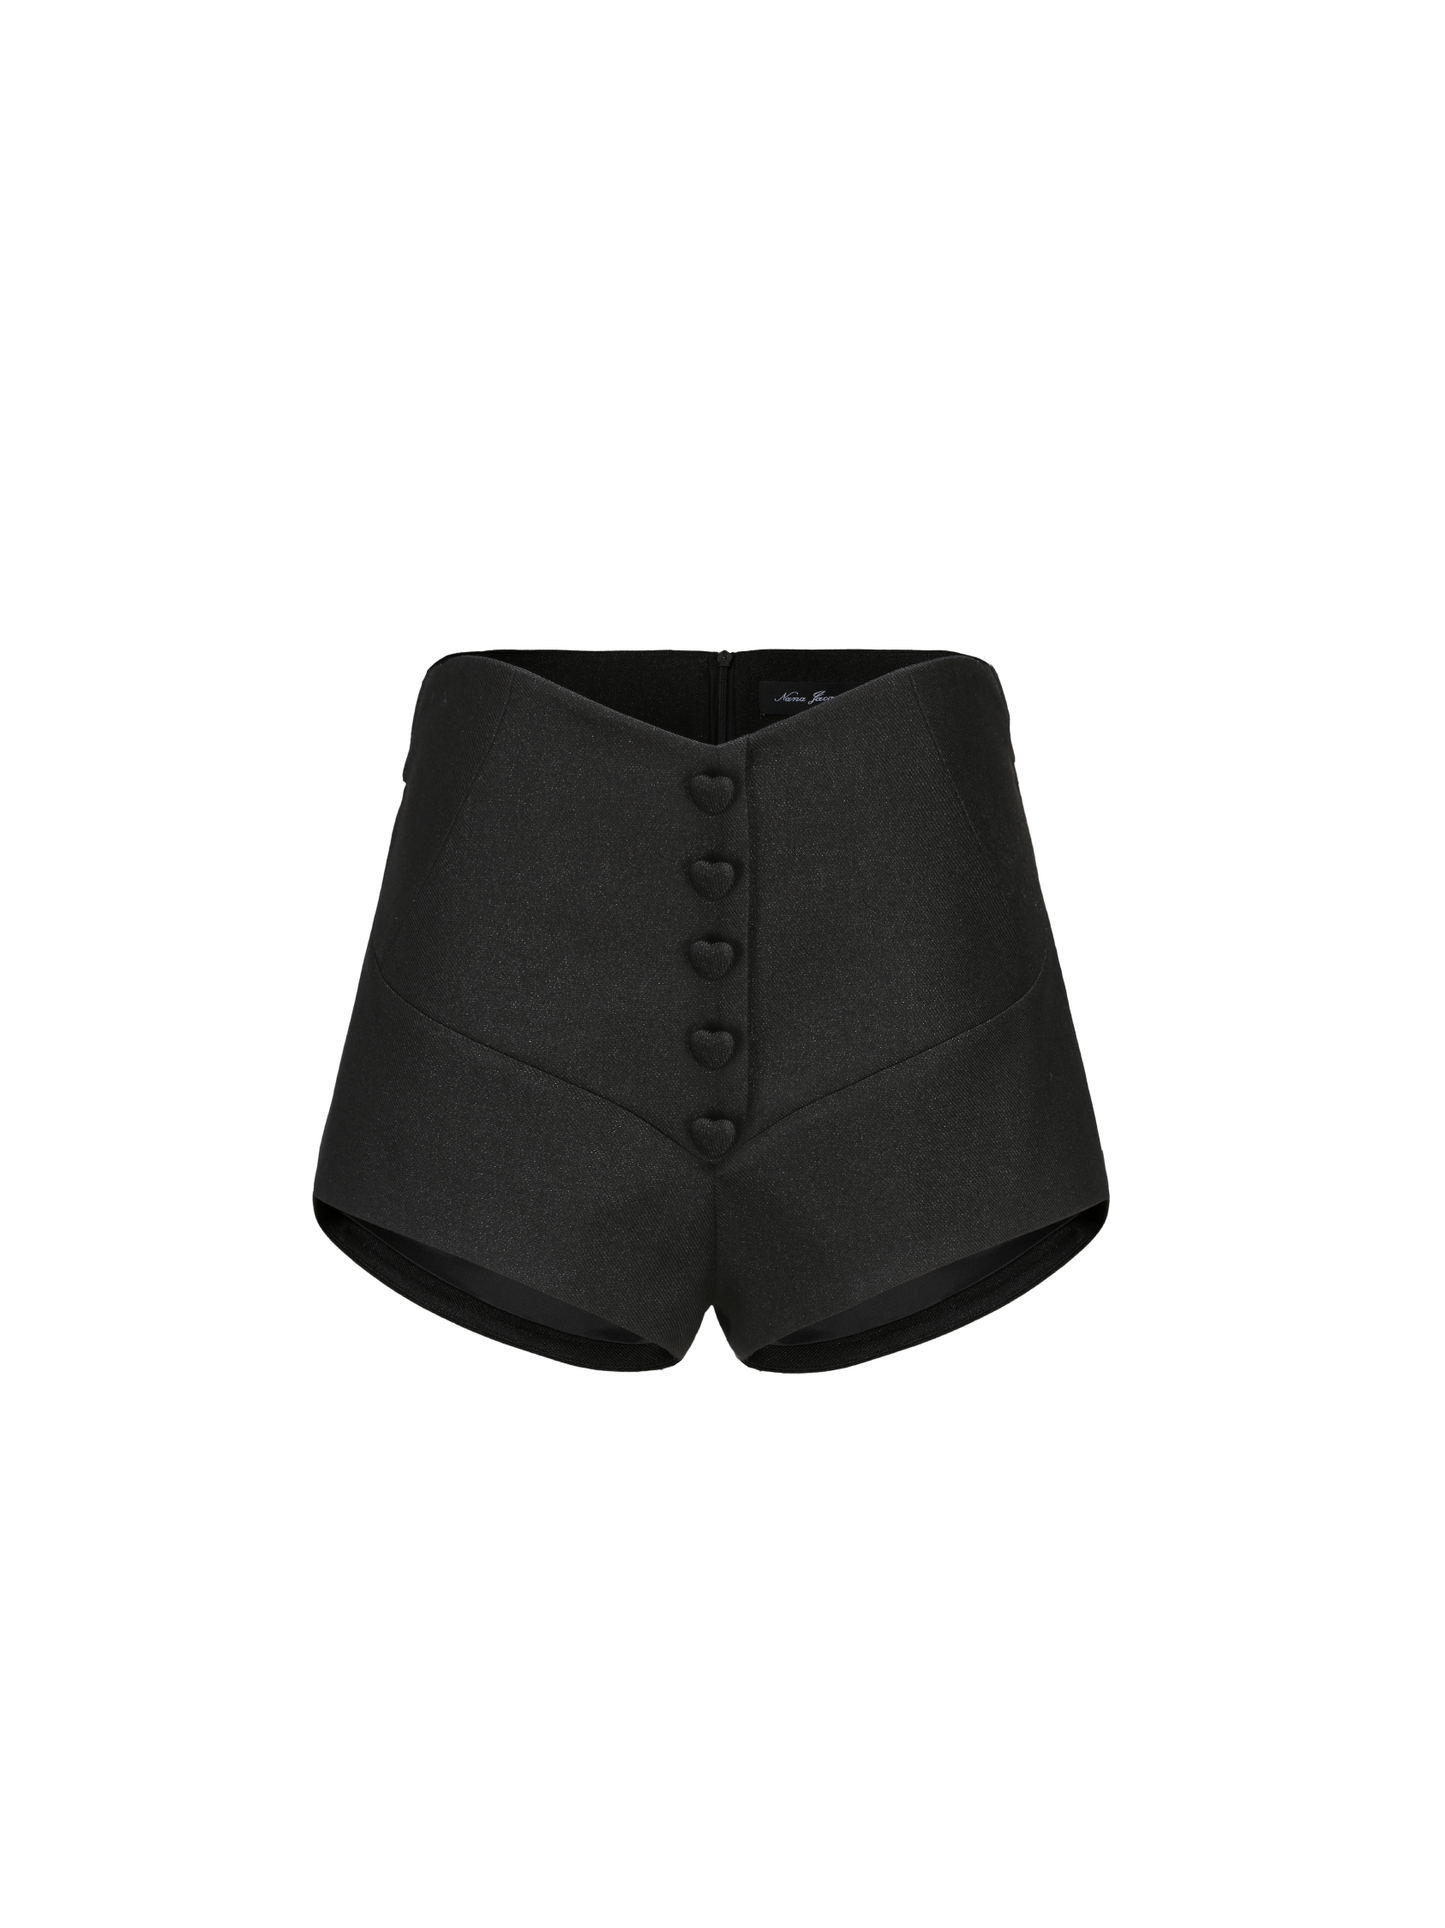 Annica Heart Shorts (Black)